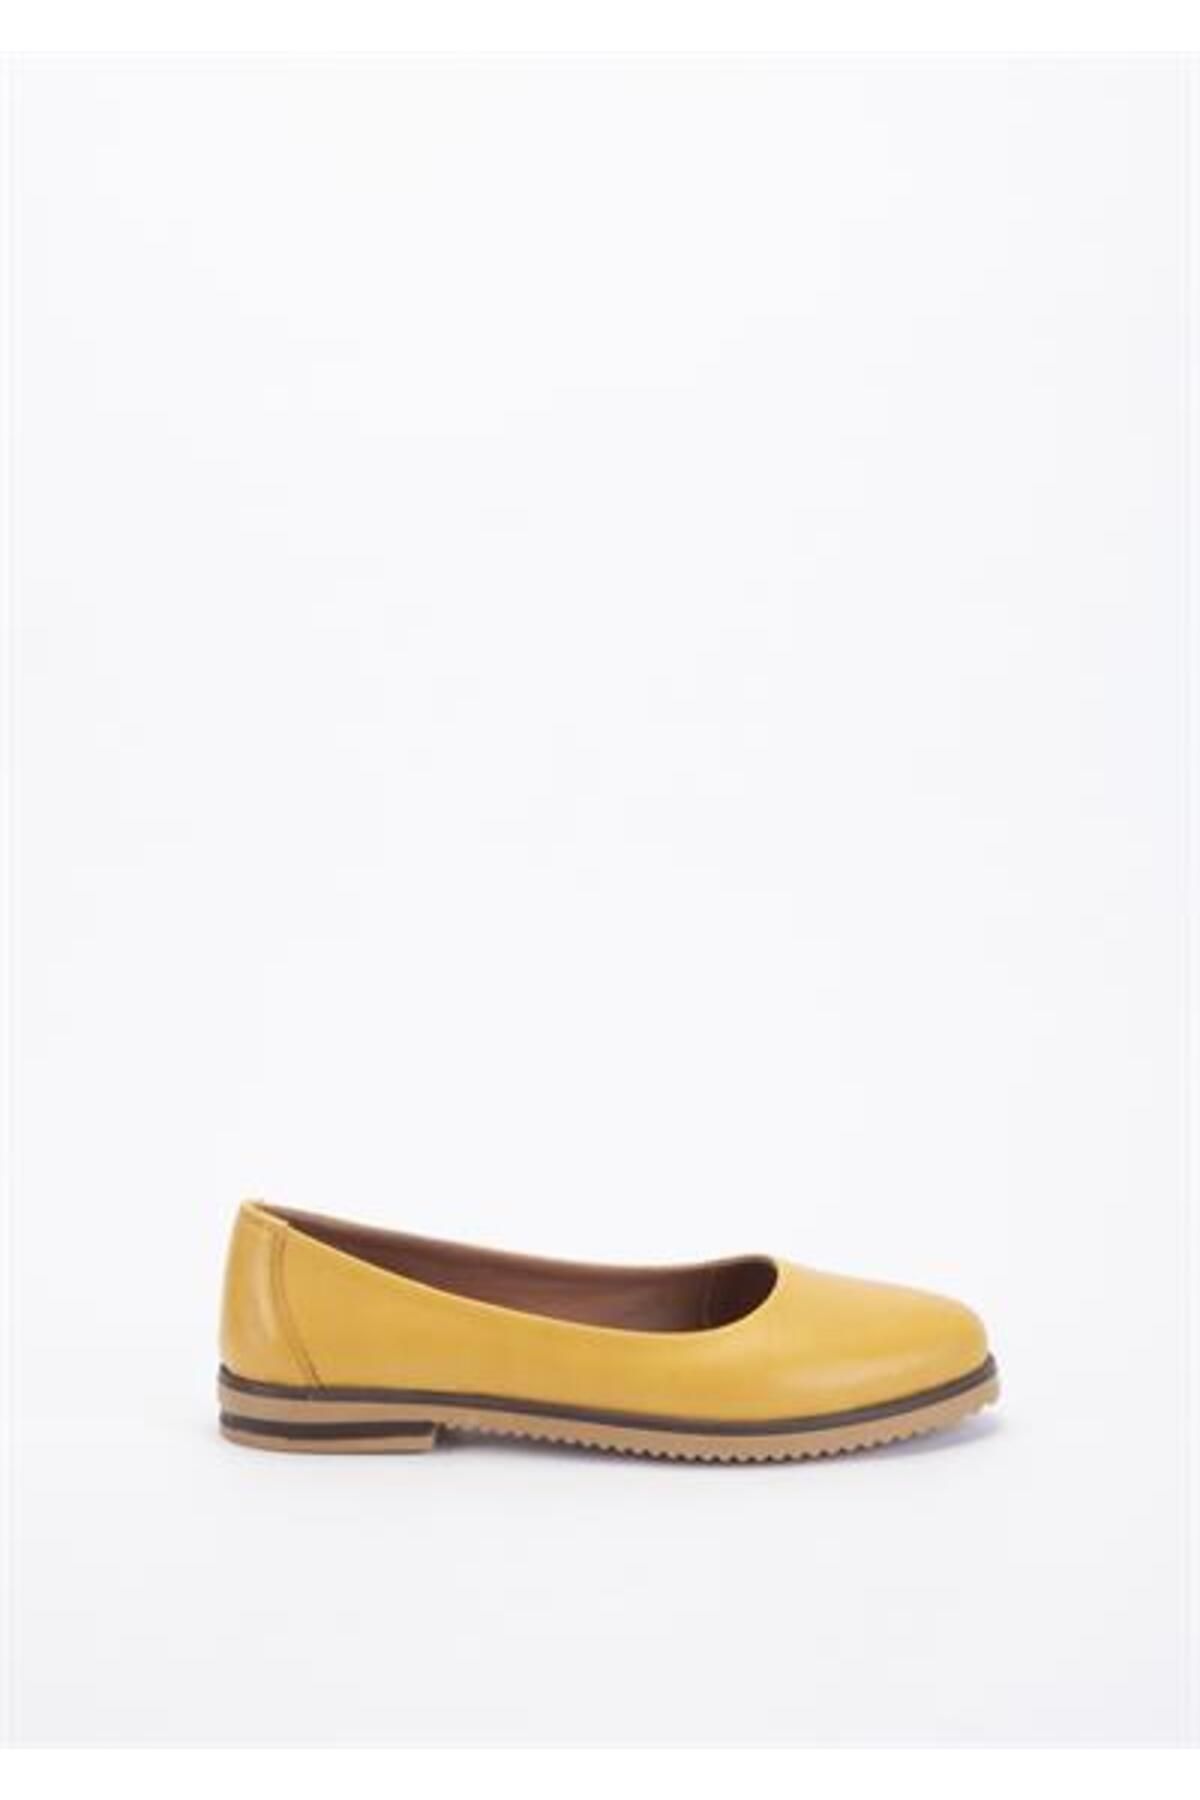 Yeşil Kundura G13 Y394124 Y23 Kadın Sarı Deri Ayakkabı